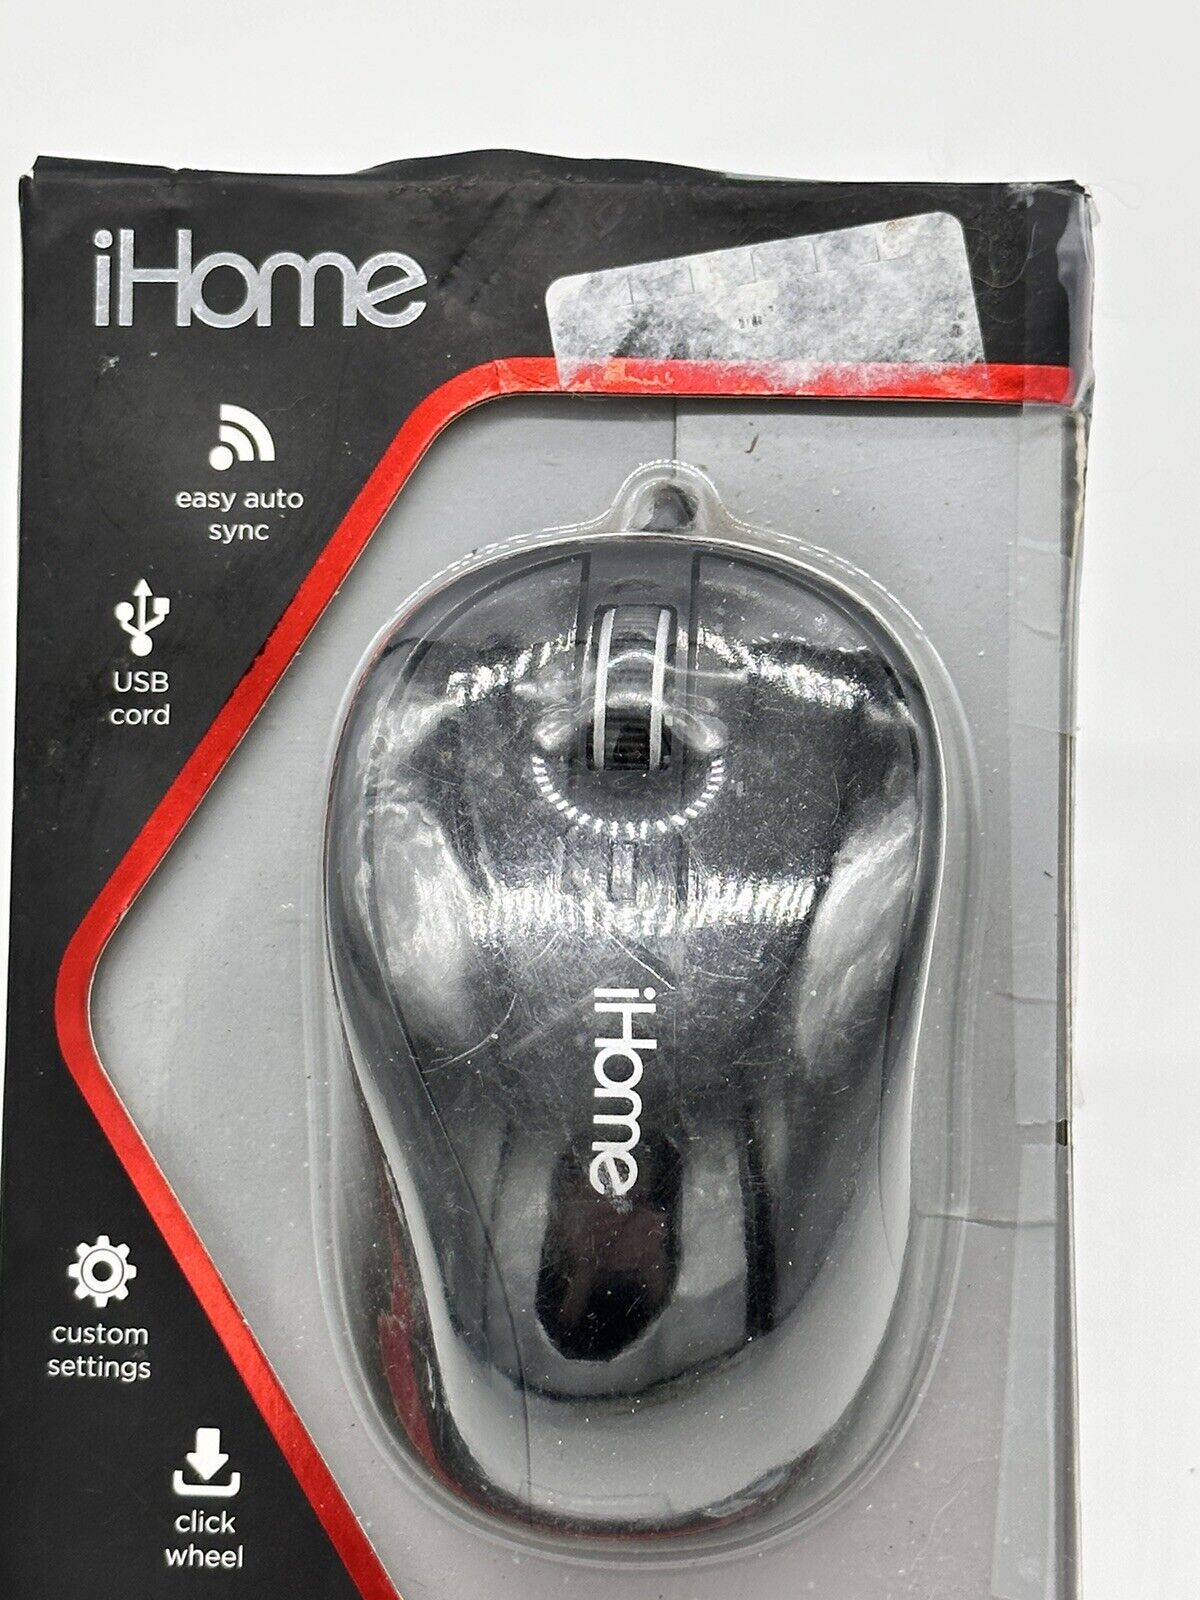 iHome Ergonomic Optical USB Desktop Mouse Corded IH-M1010B Black Windows 2000 XP